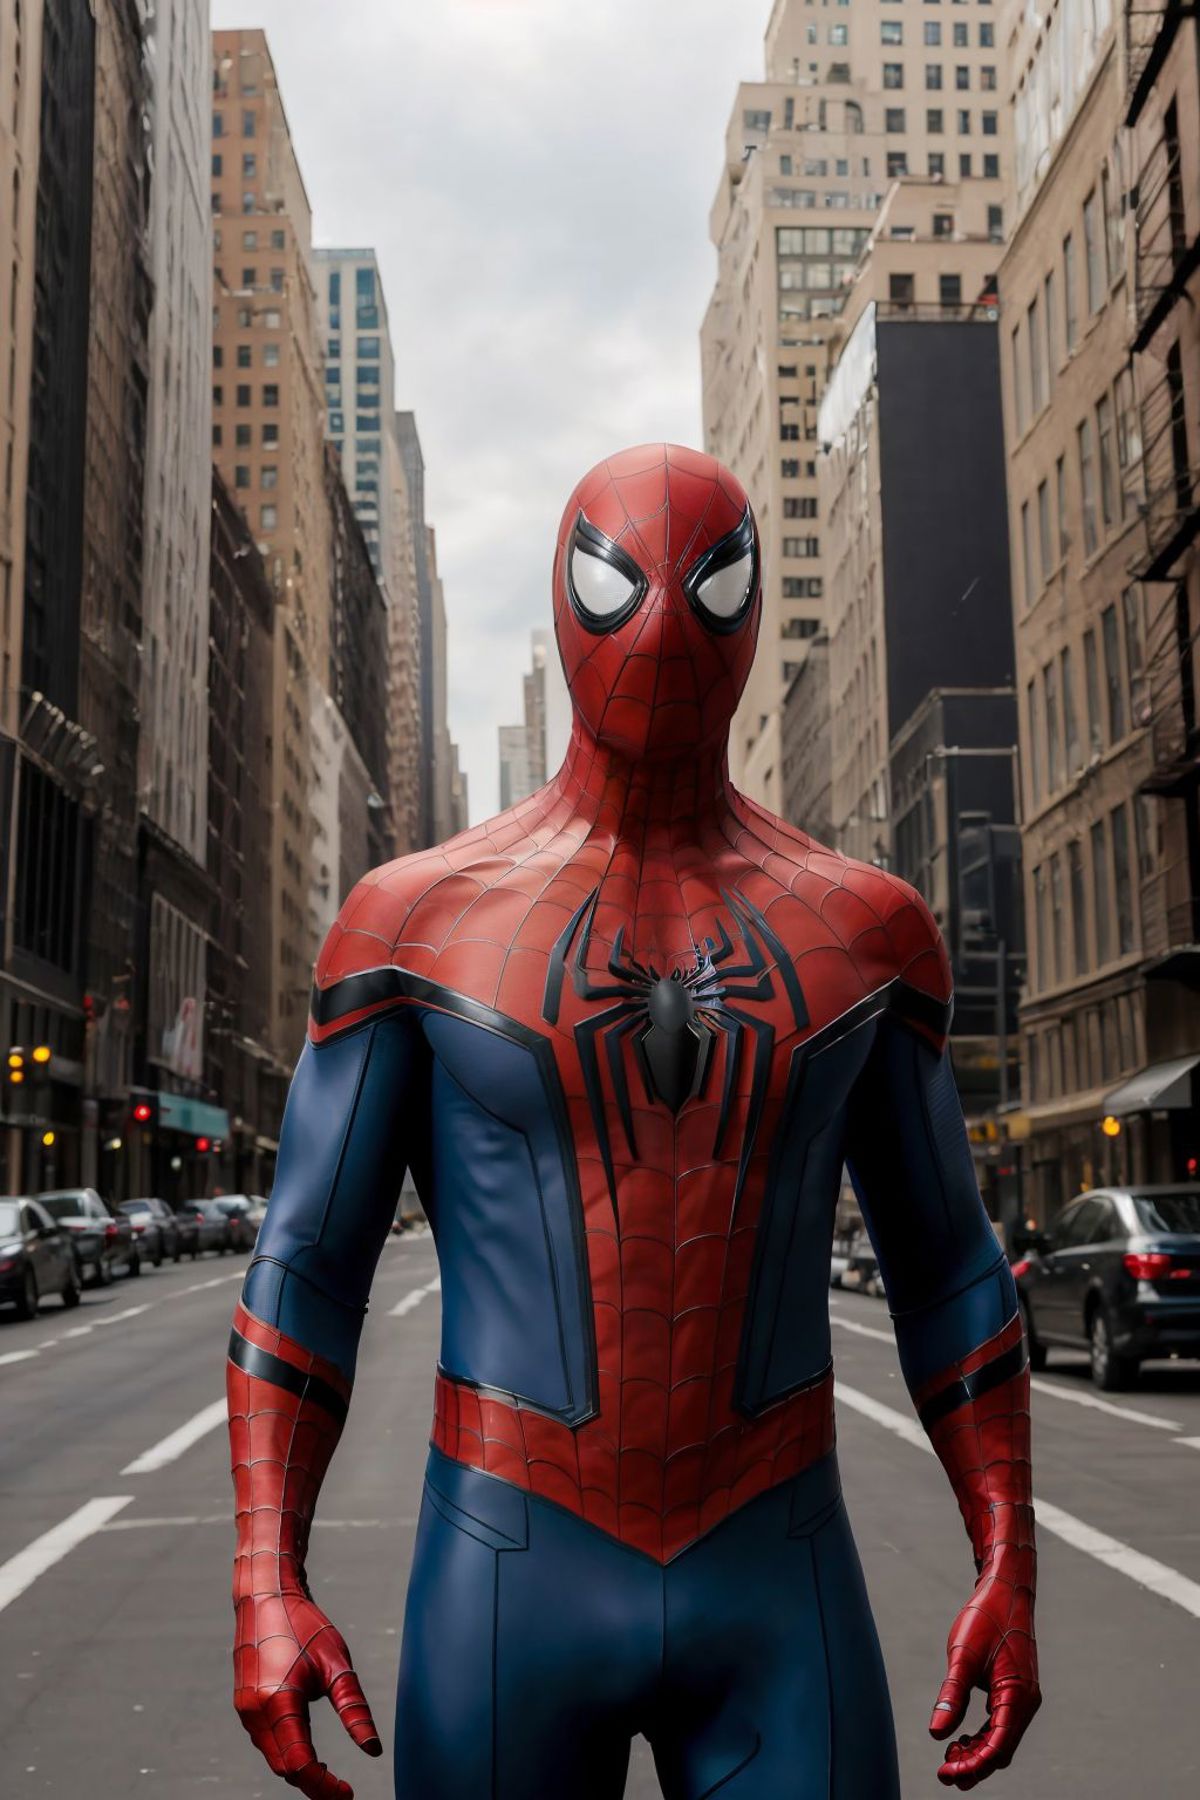 Spider-Man Costume image by Montitto